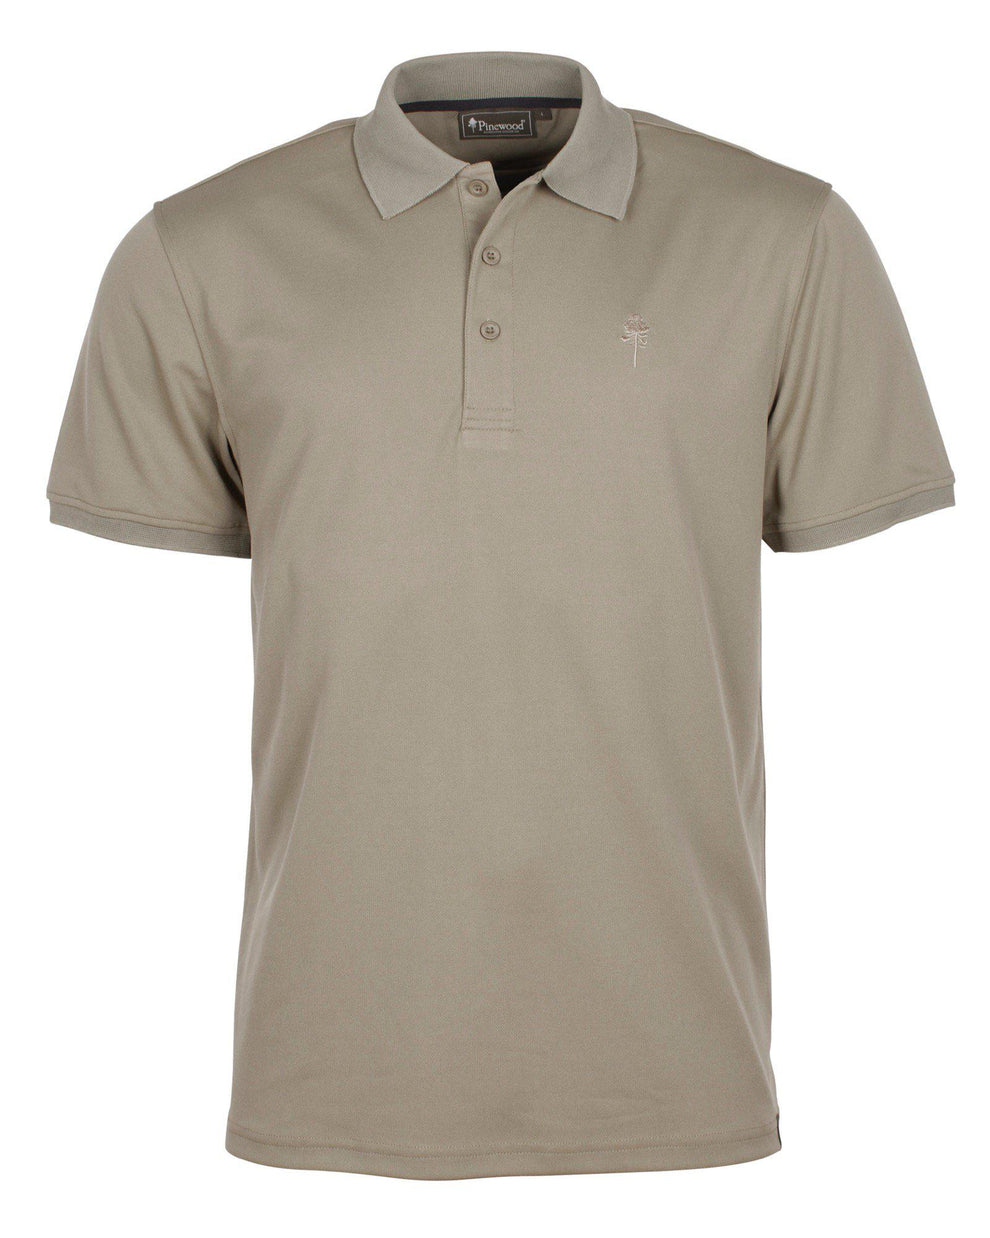 9458-248-01_Pinewood-Ramsey-Coolmax-Polo-Shirt-Mens_Mid-Khaki